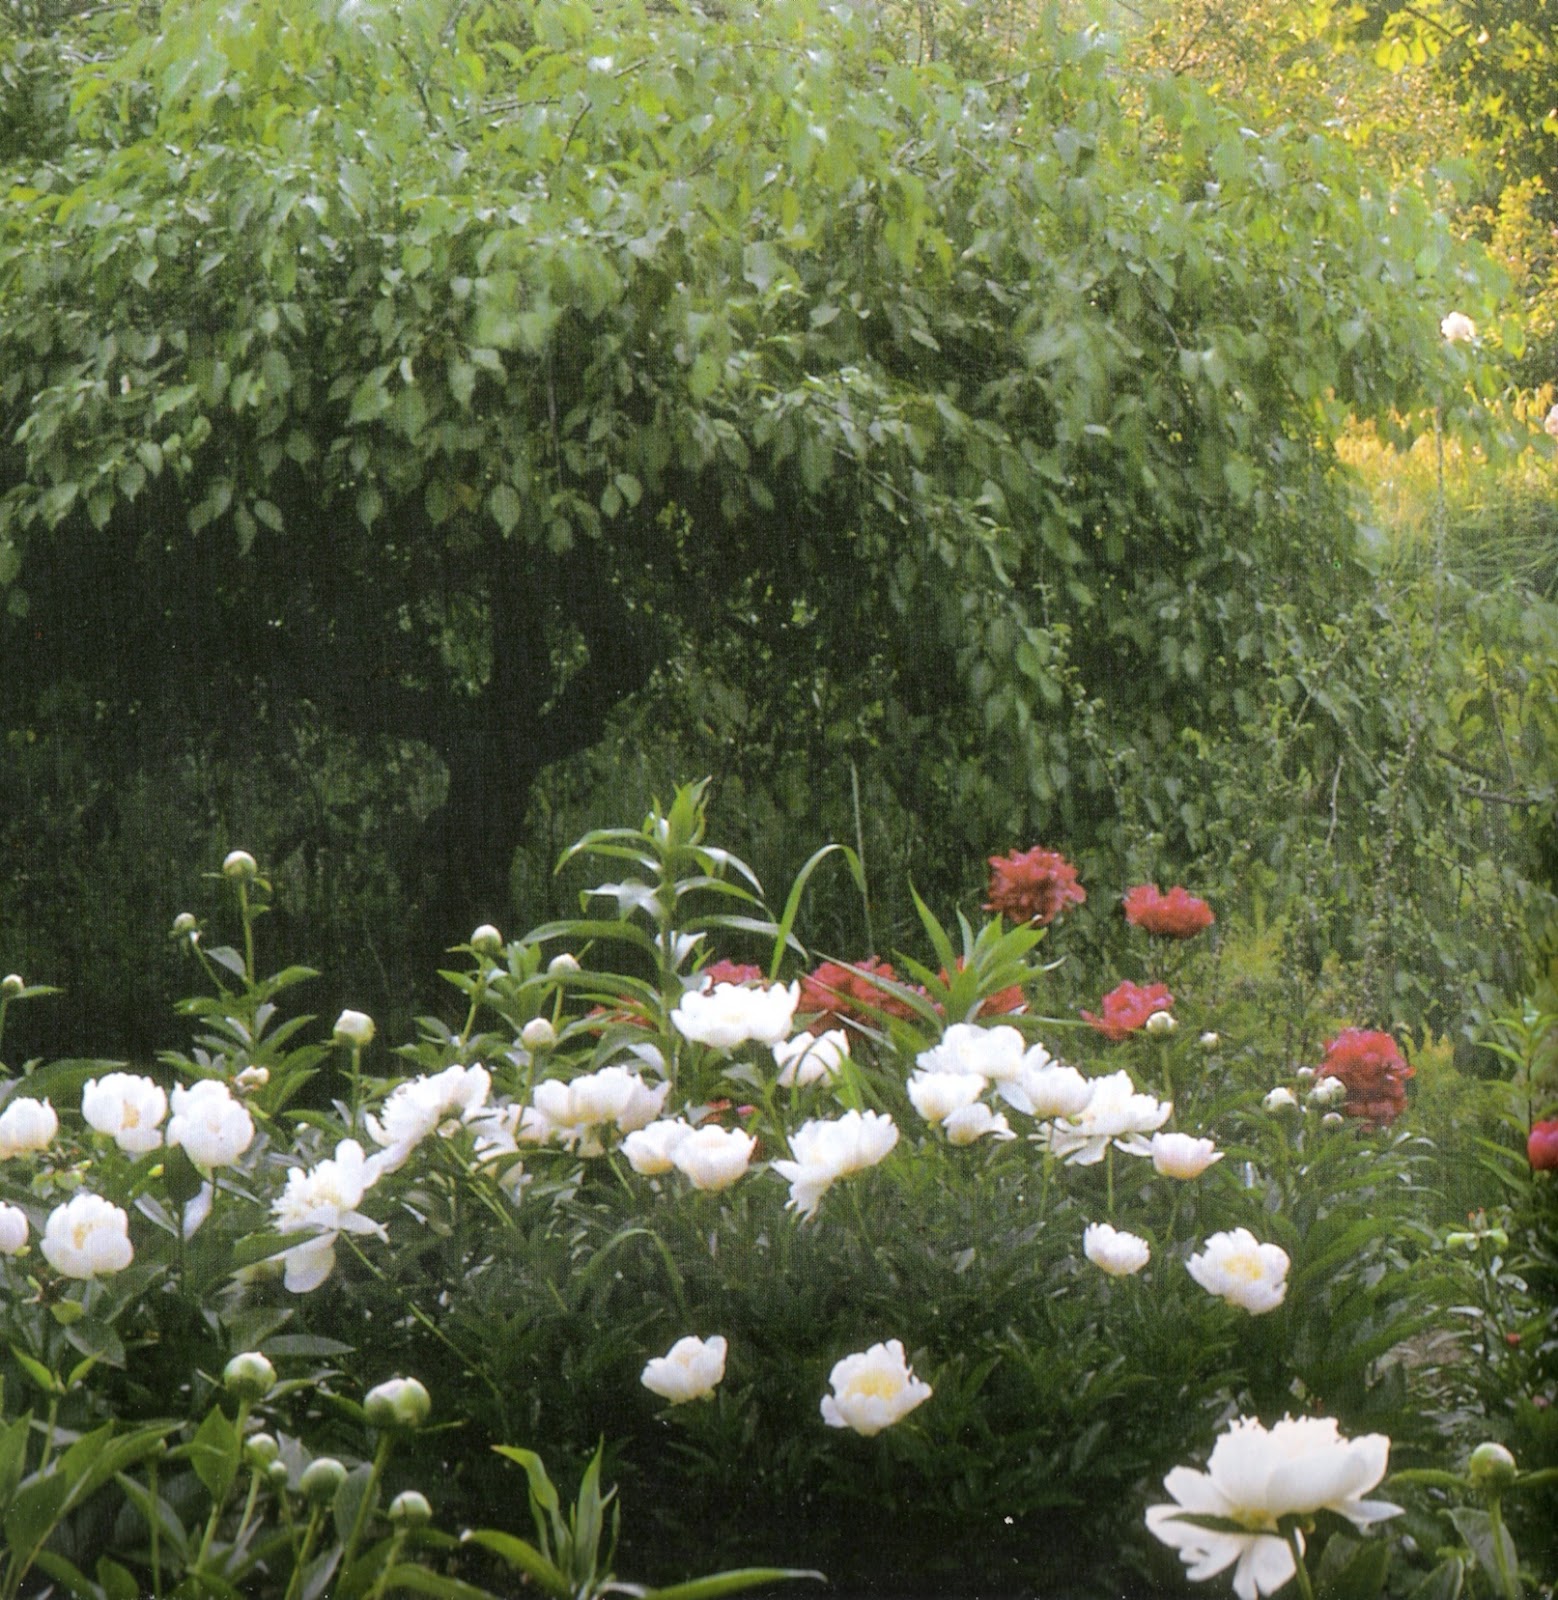 Linenandlavender Net Flowers In Profusion Tasha Tudor S Garden